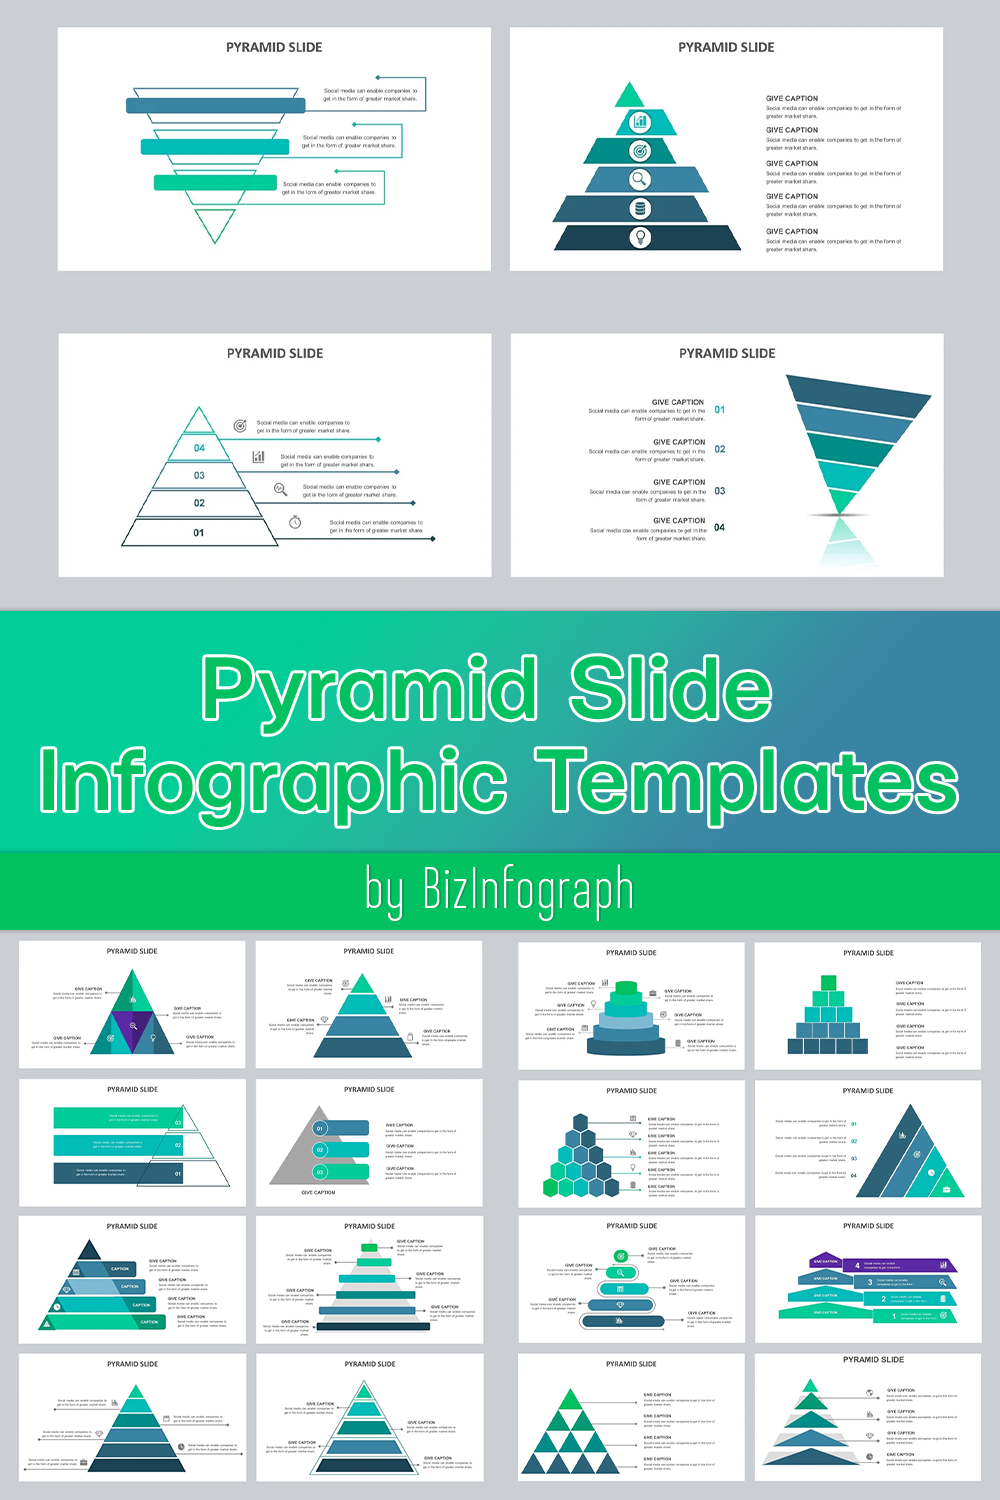 pyramid slide infographic templates pinterest 958